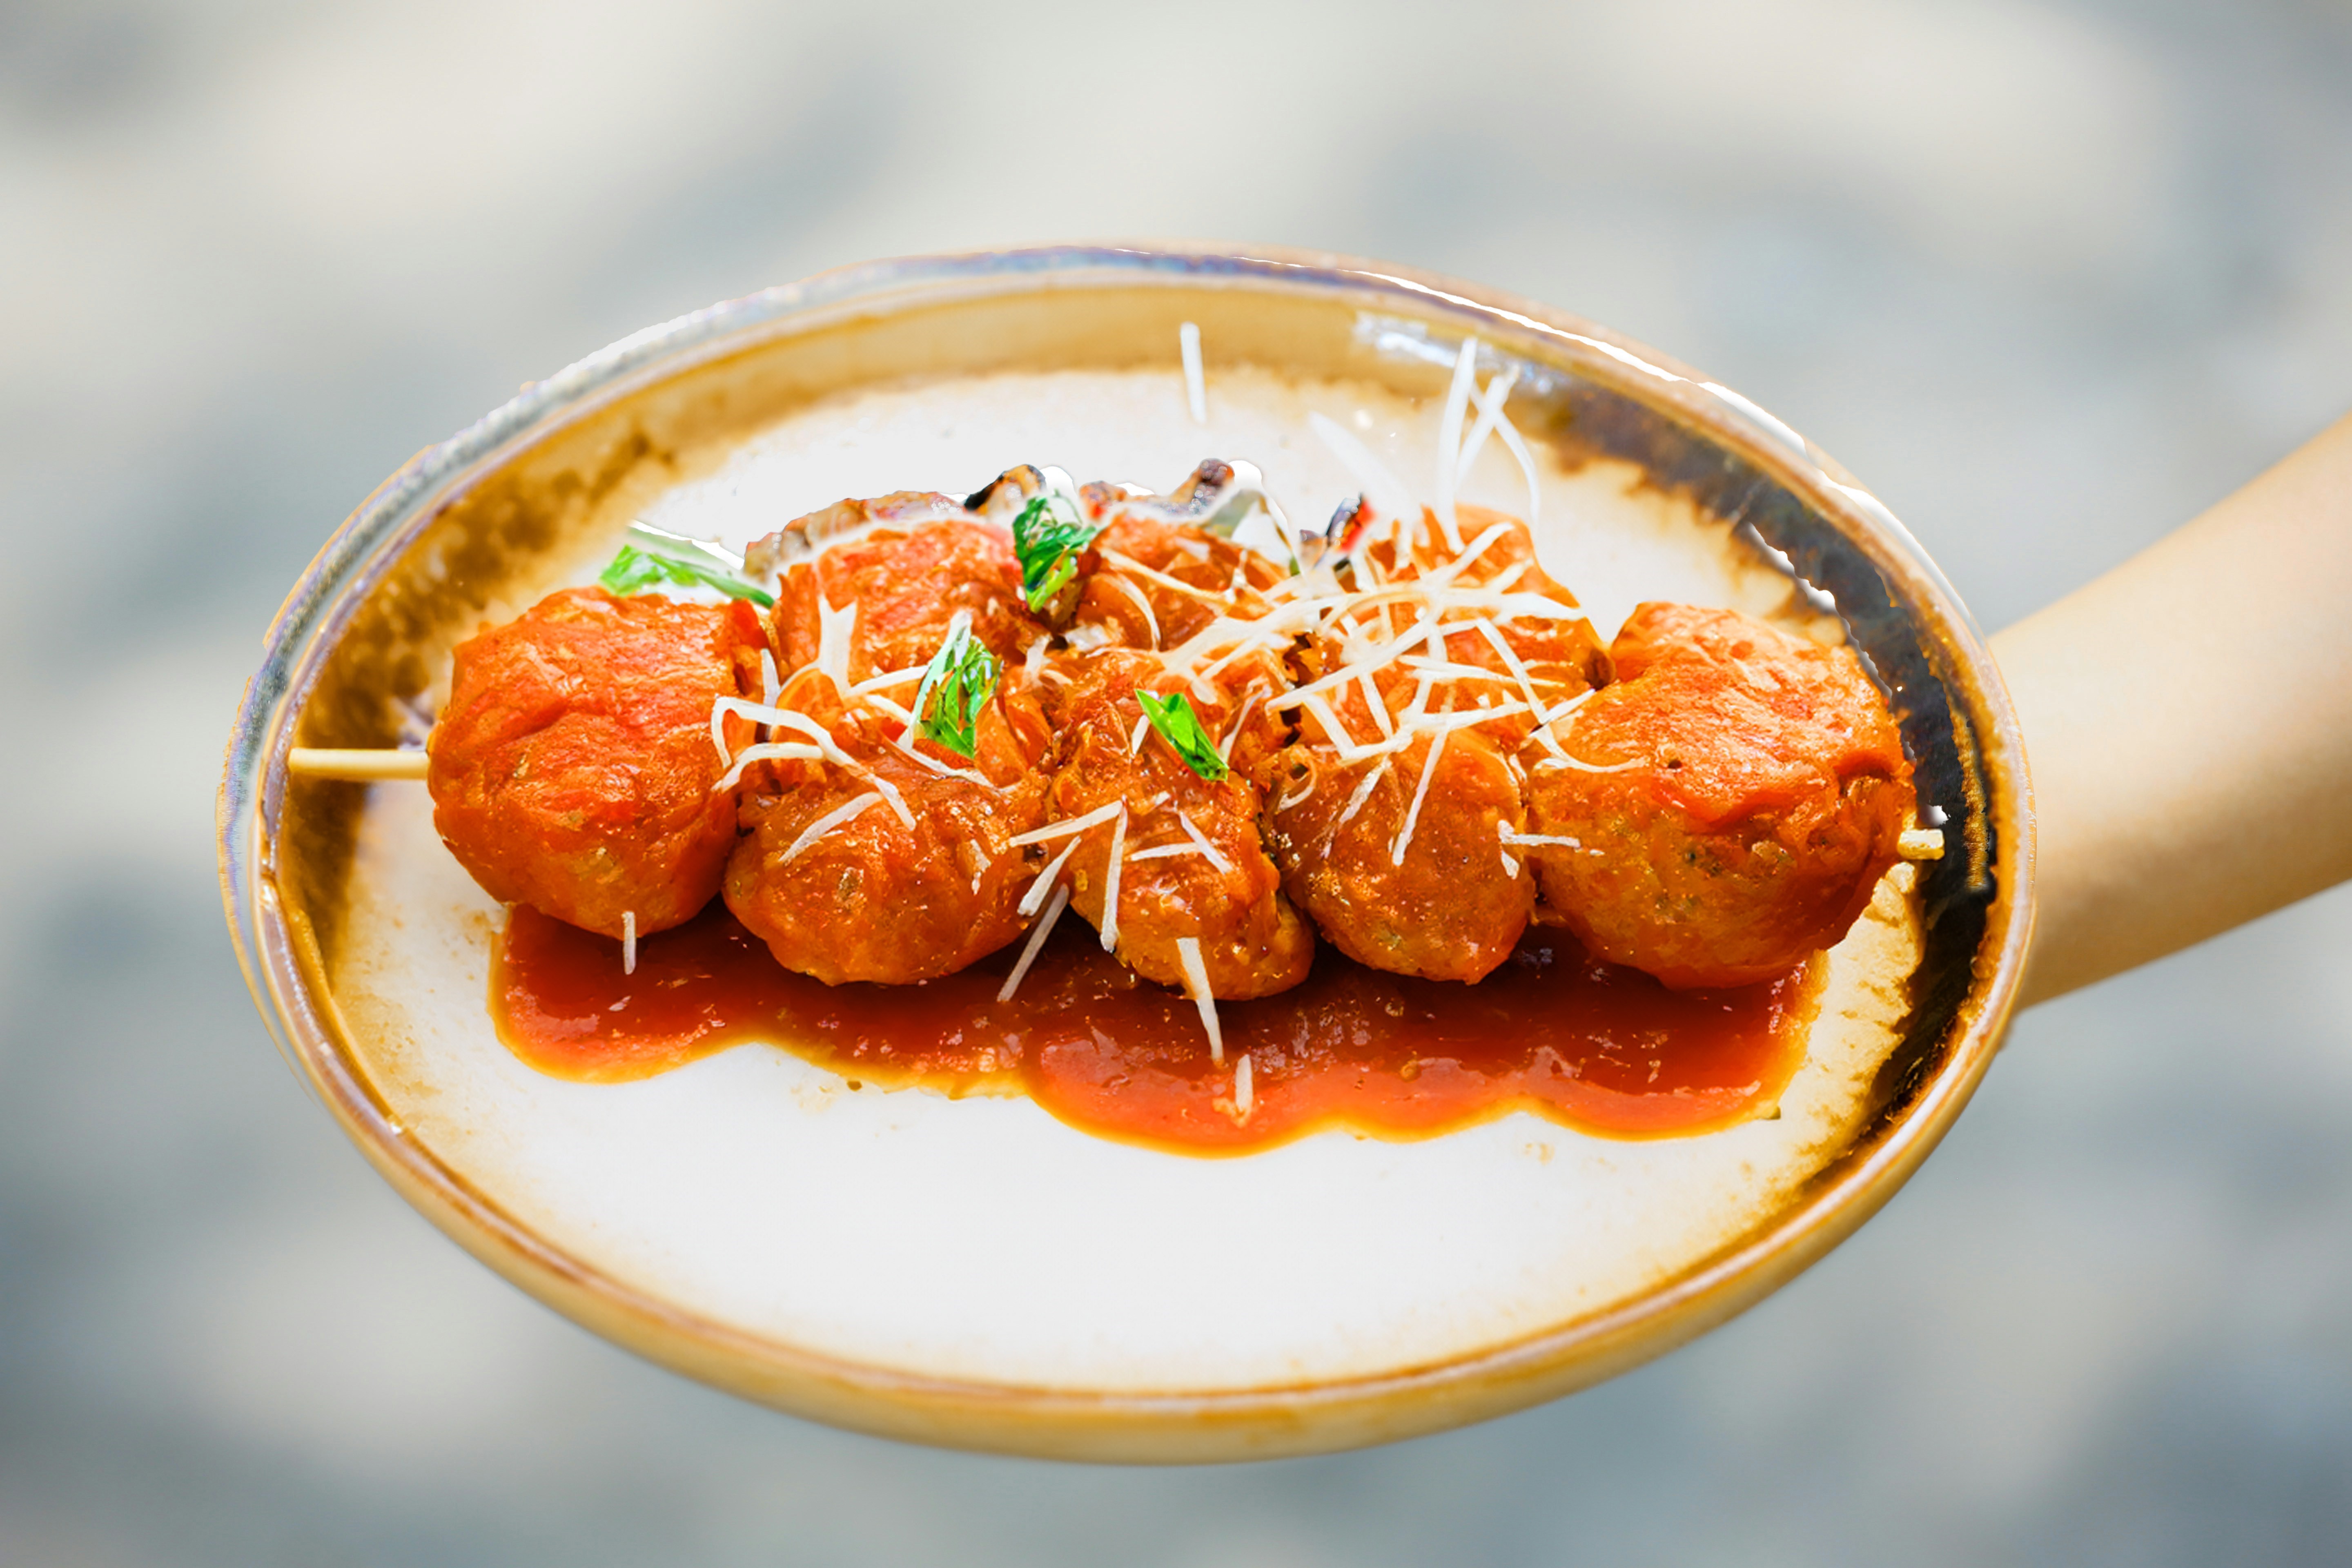 Shared Lunch - Mediterranean meatball skewers